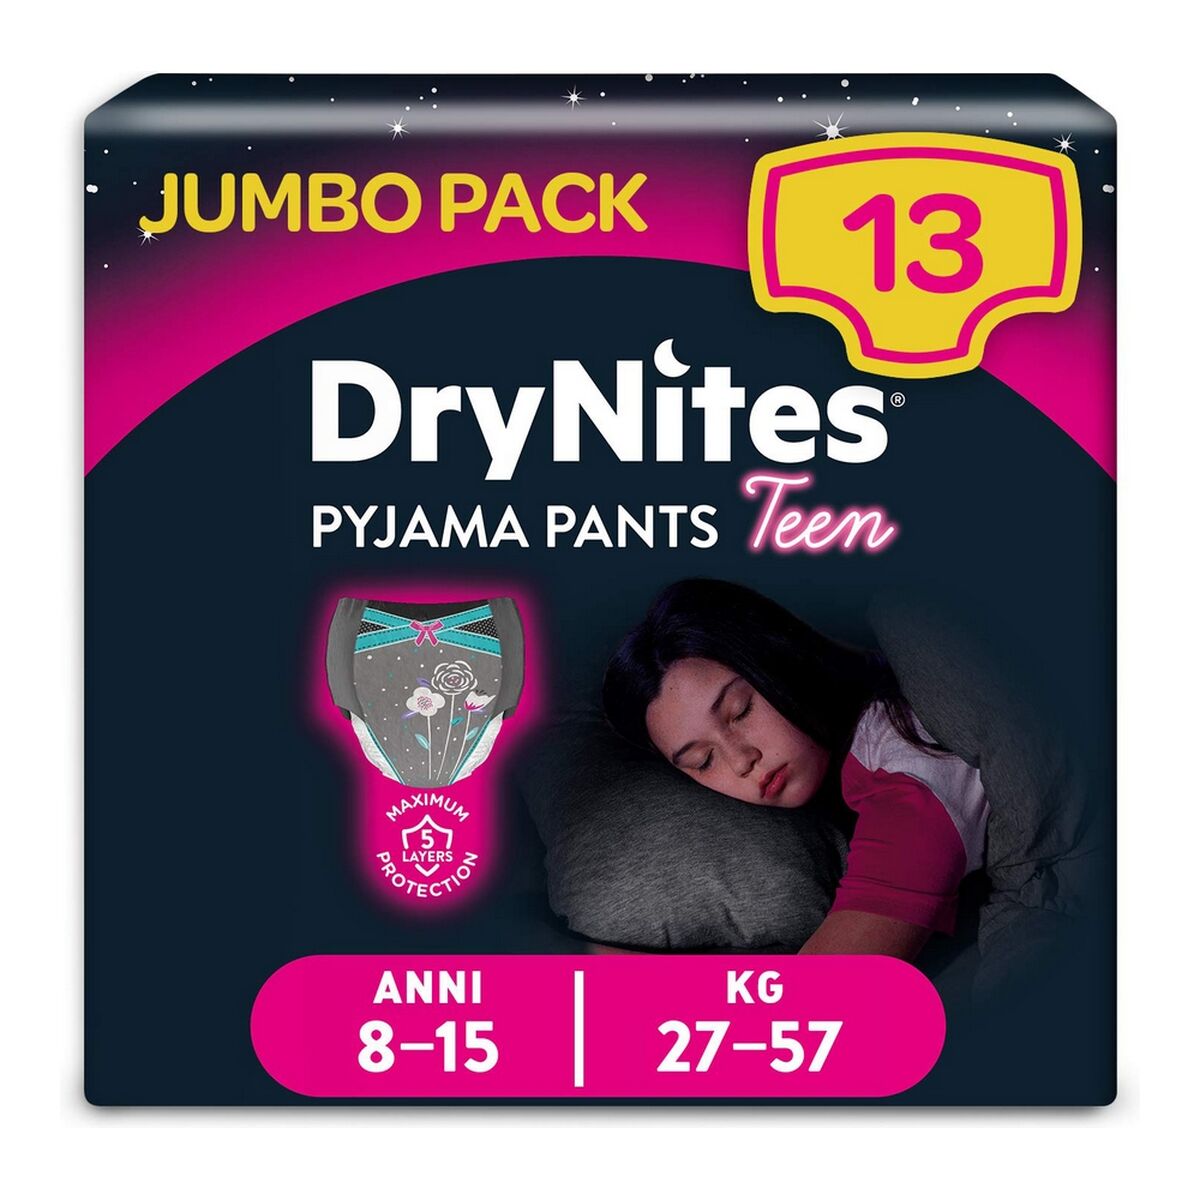 Confezione di Slip da Bambina DryNites Pyjama Pants Teen (13 uds)